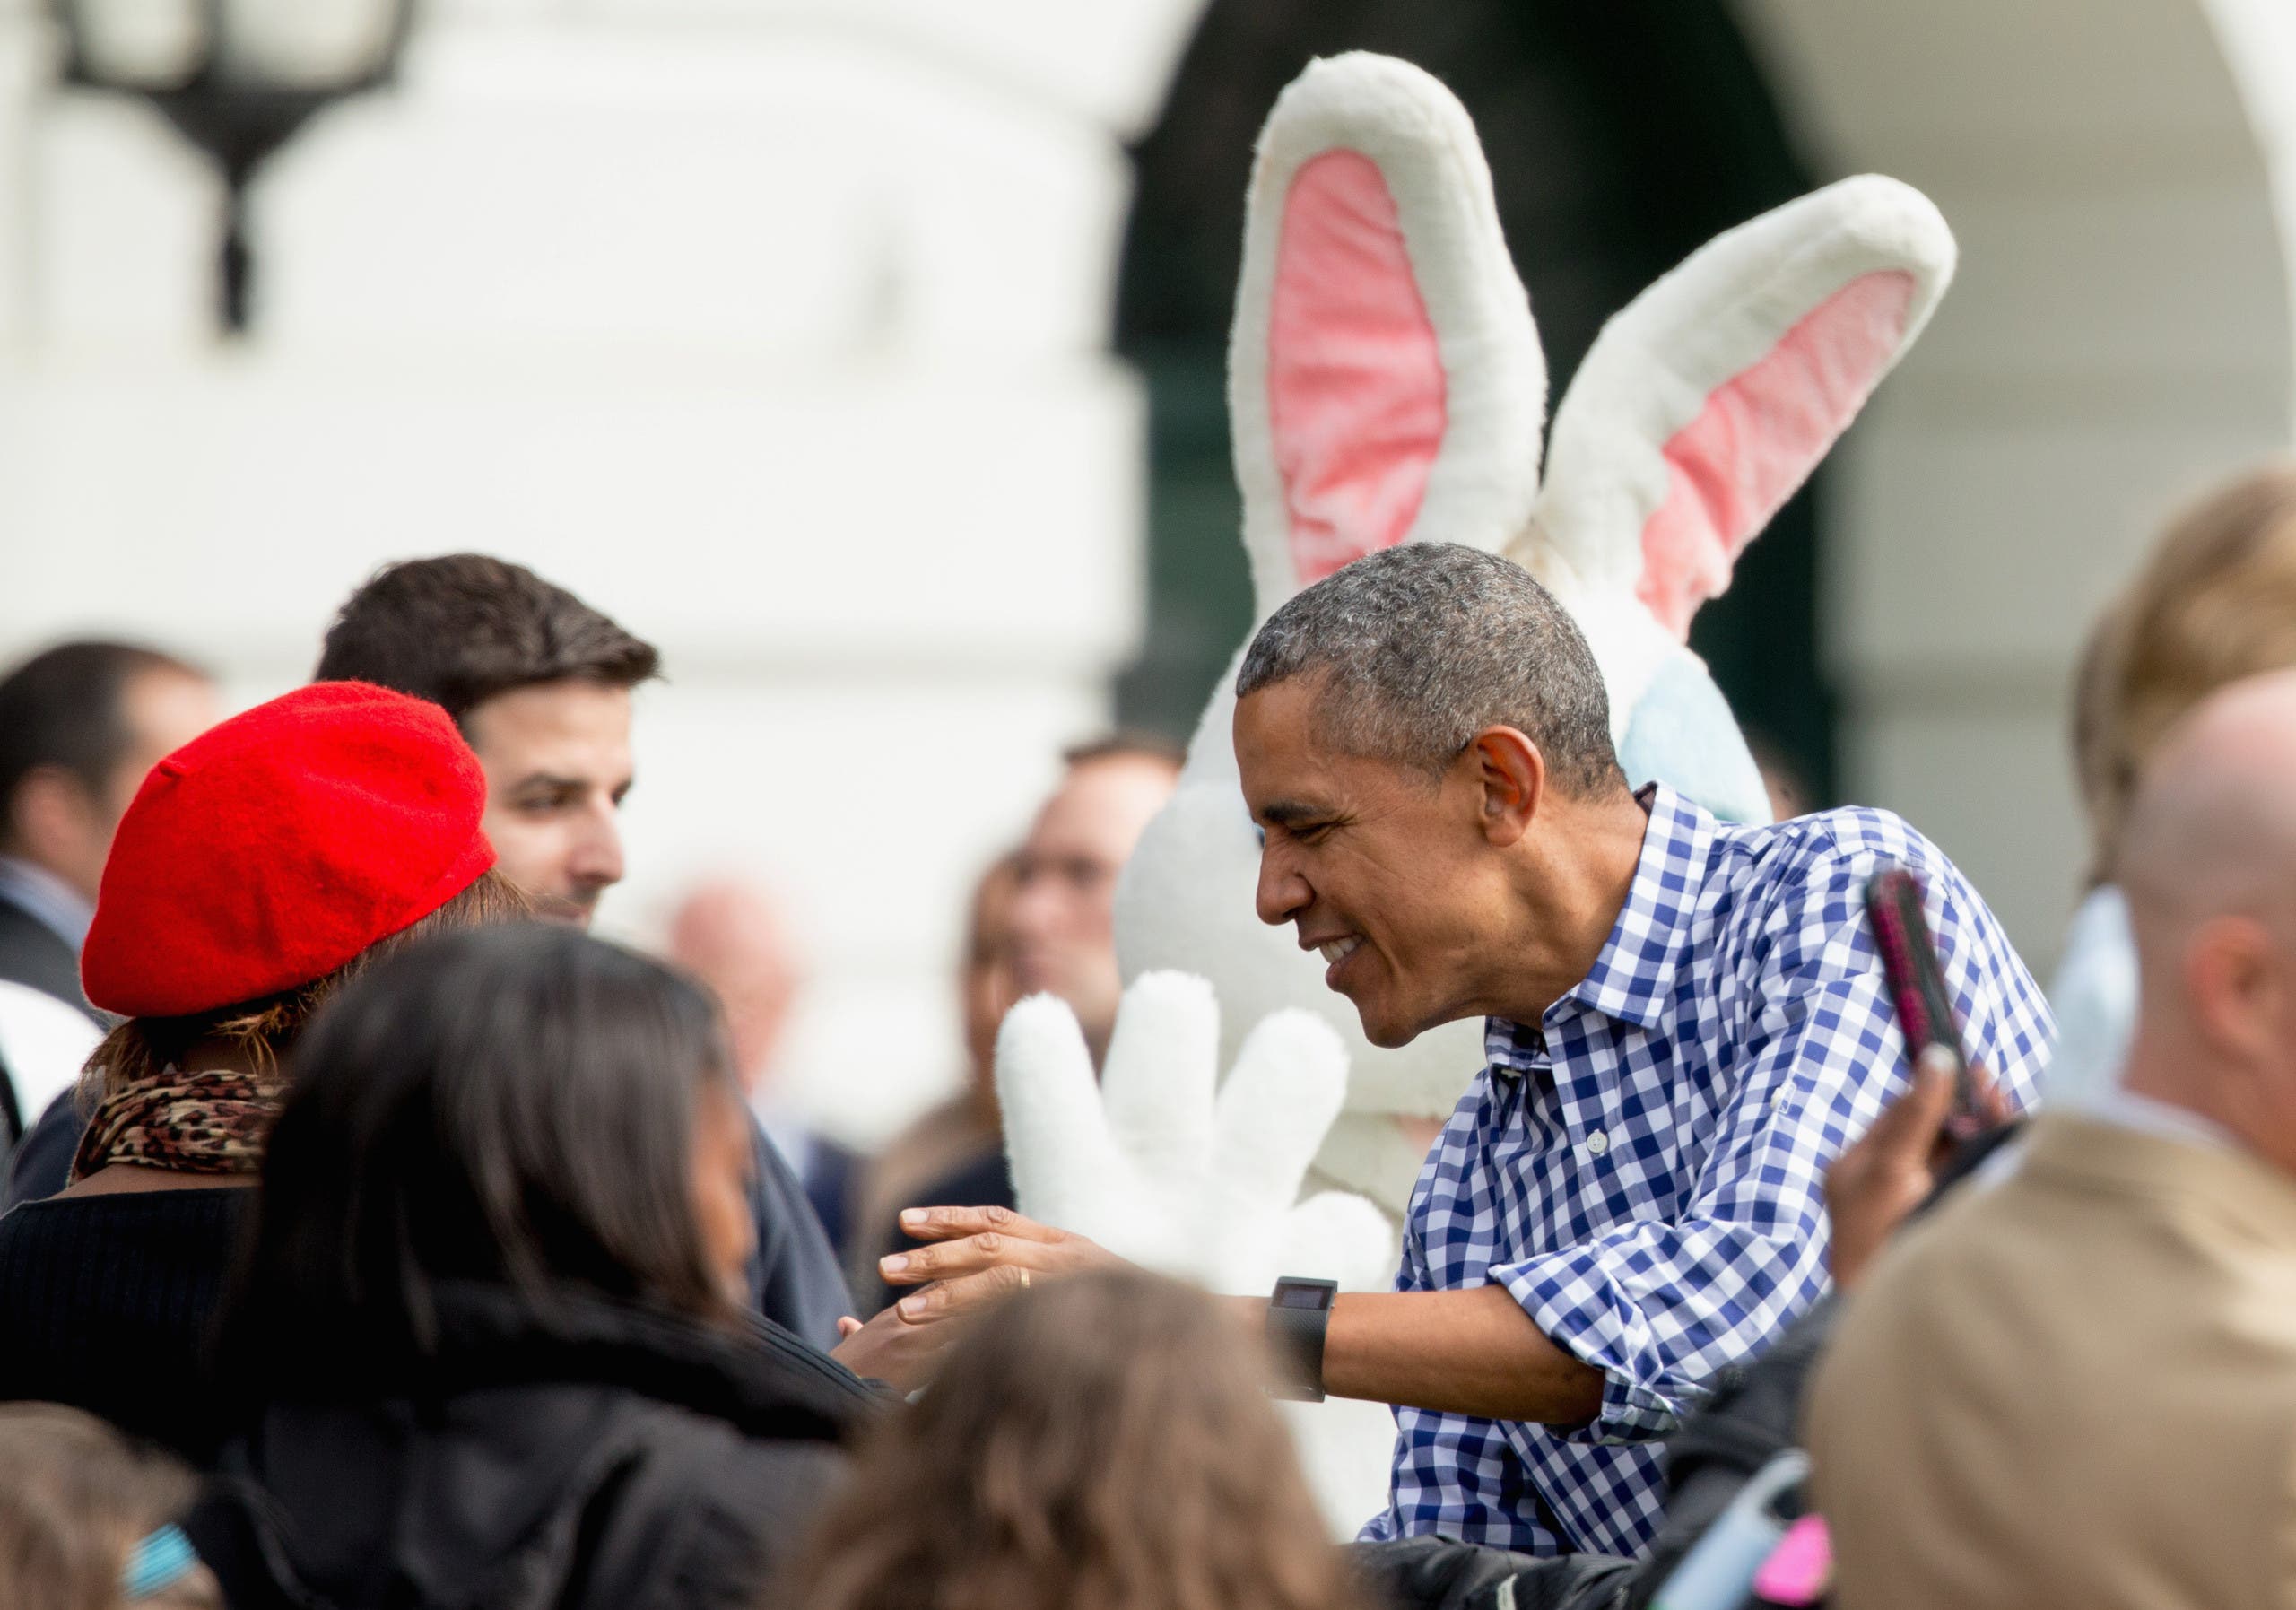 Obama’s final Easter egg roll